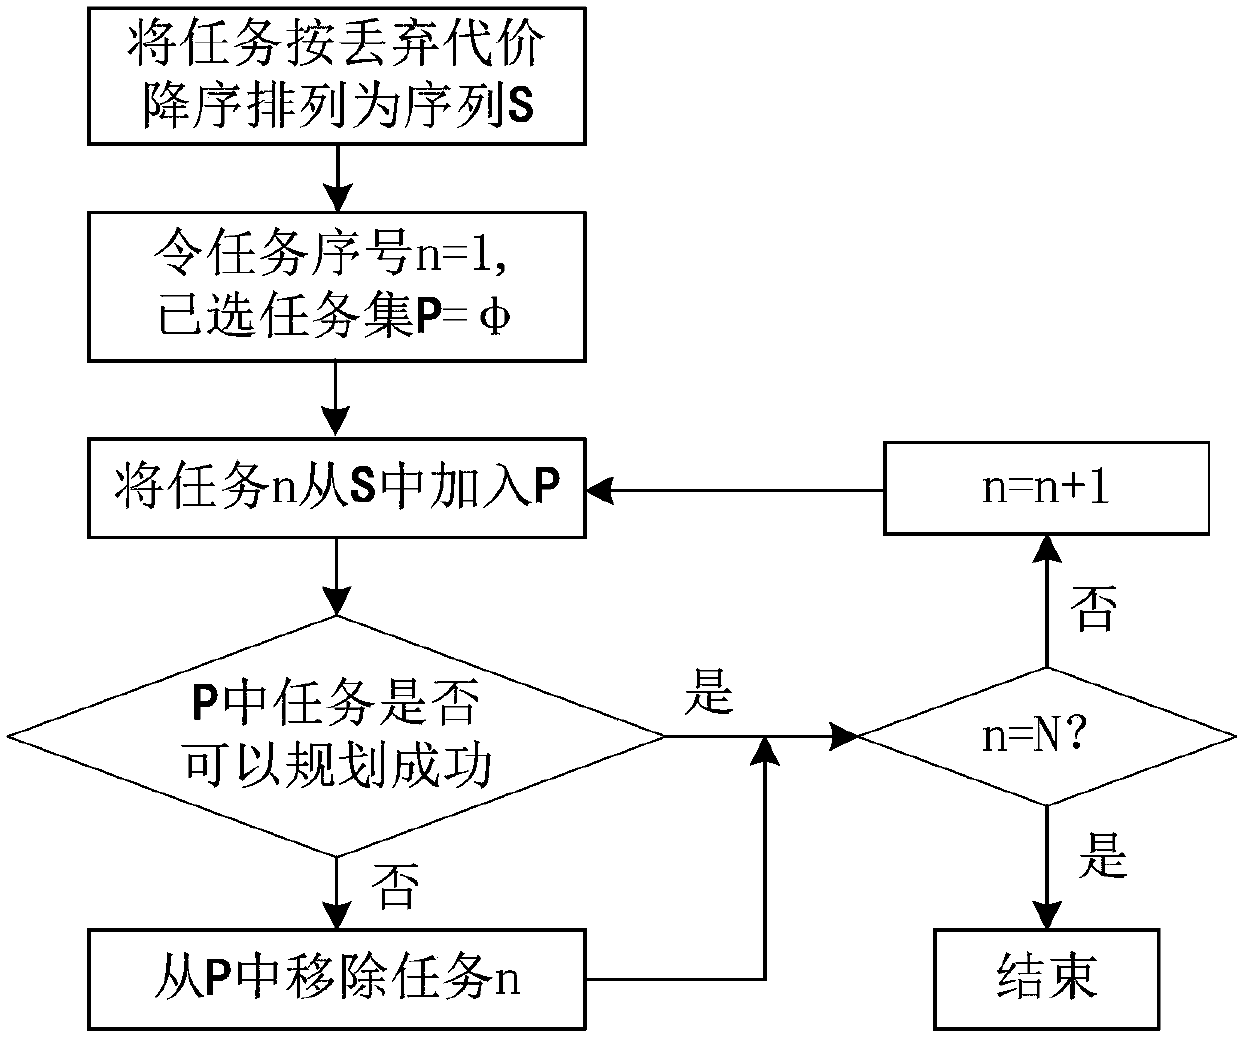 Multifunctional networked radar task planning method based on branch-and-bound method